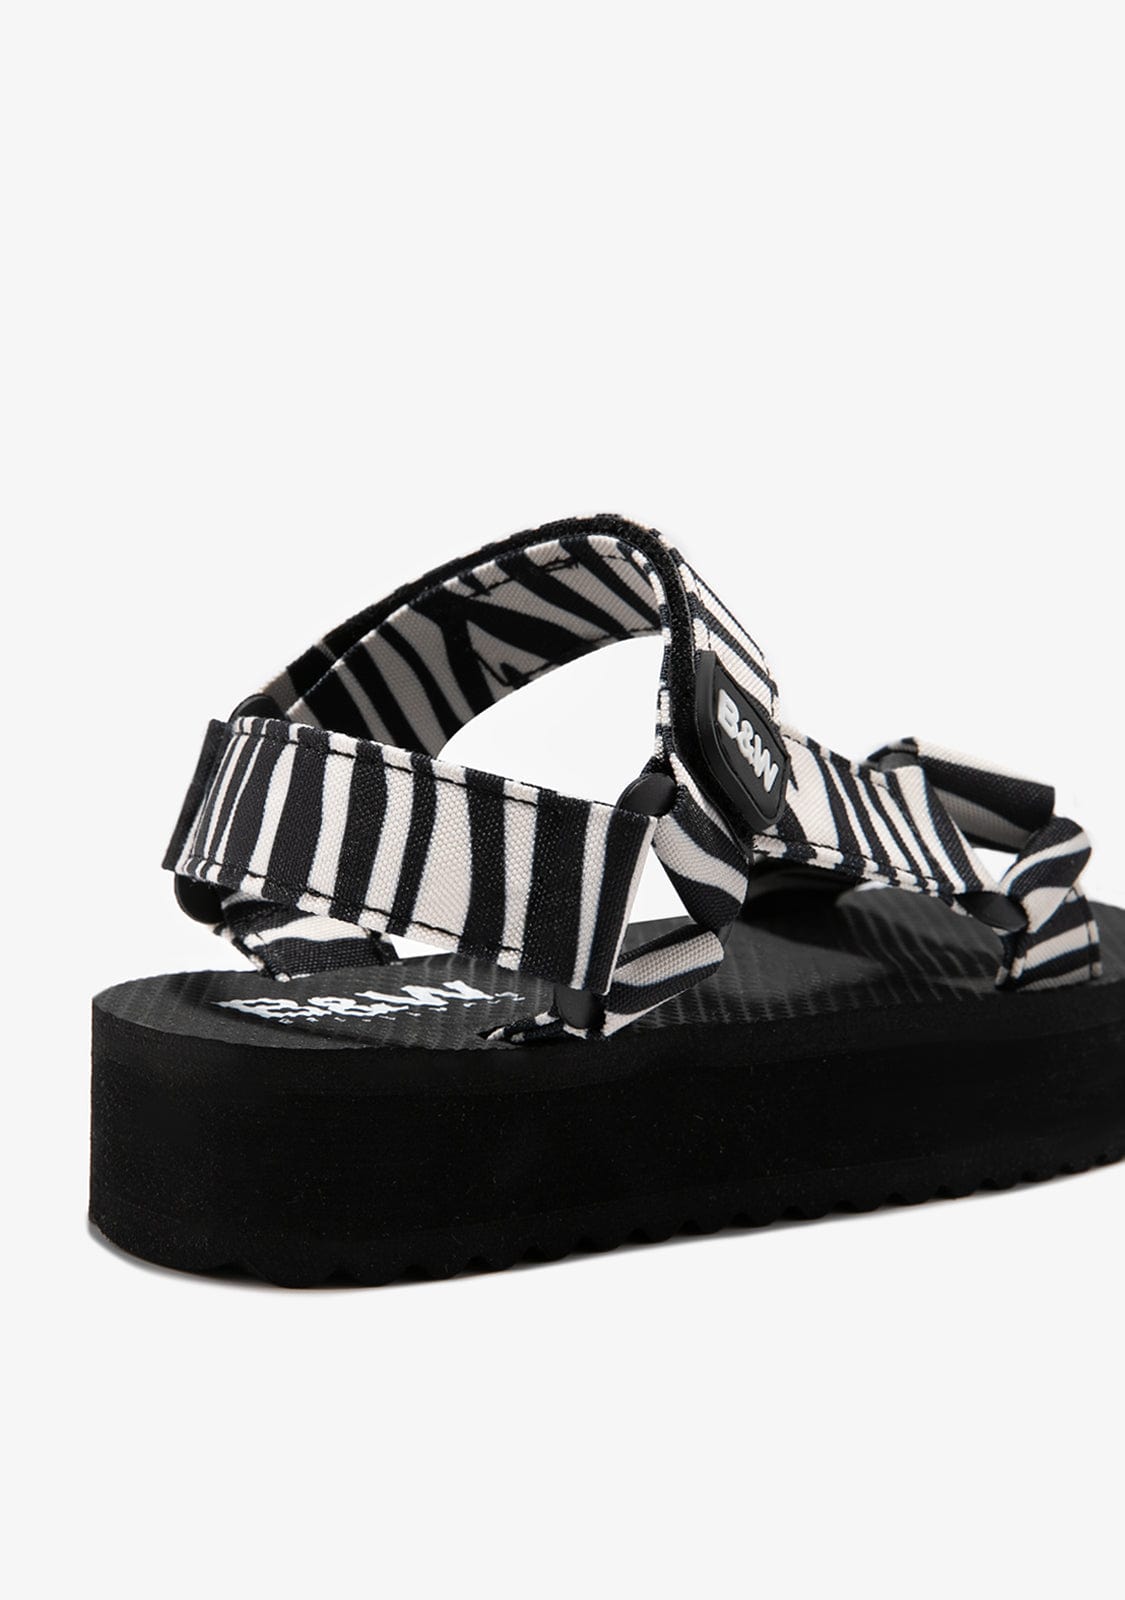 B&W JUNIOR TIRAS Zebra Platform Sandals B&W